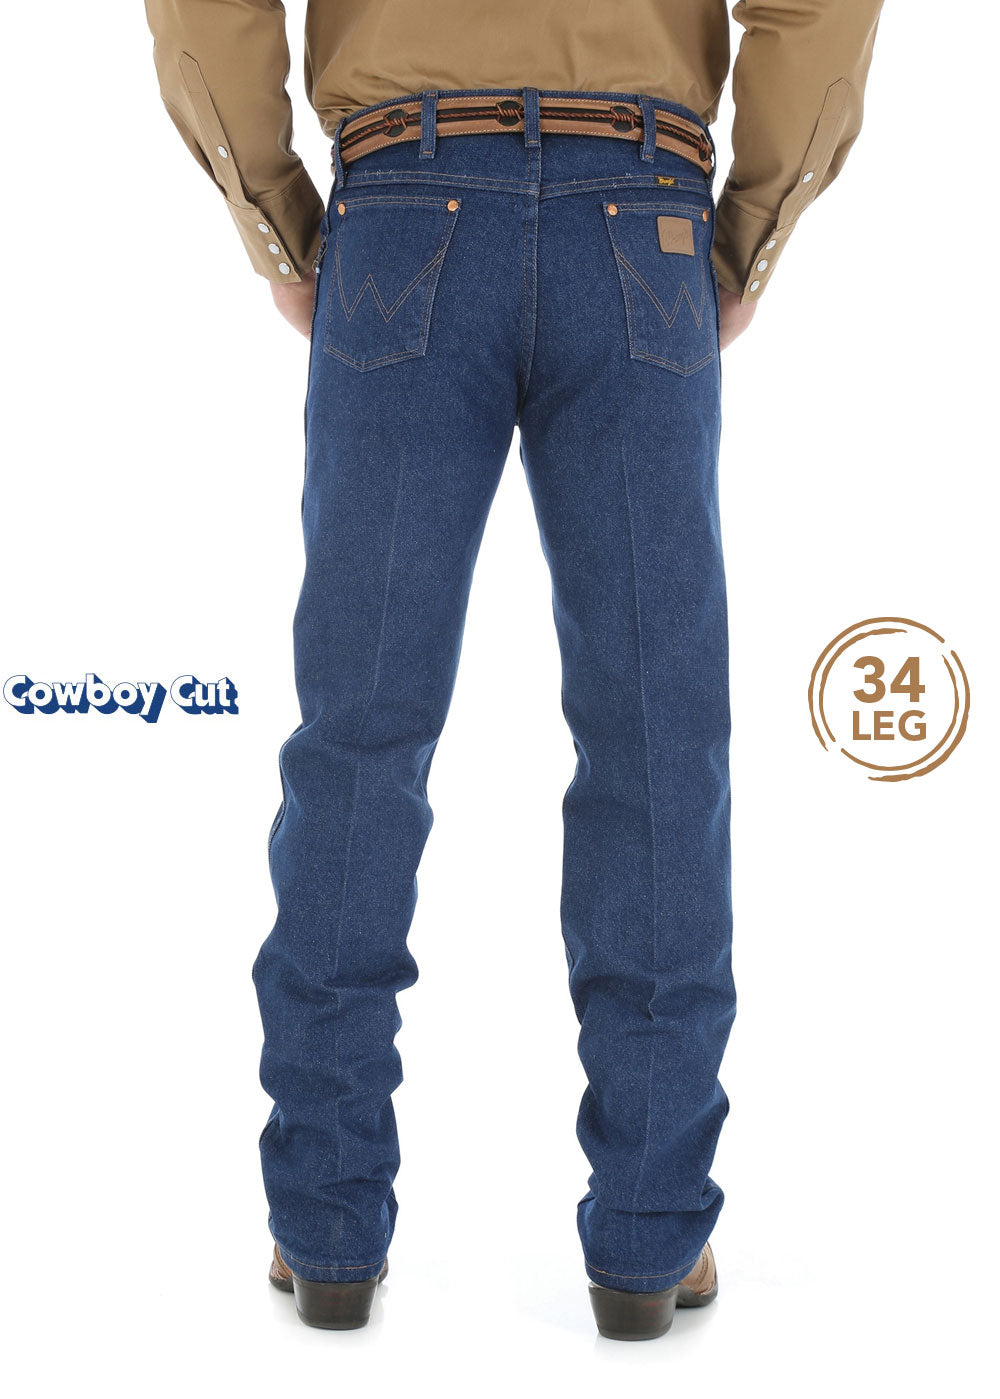 Wrangler Mens Cowboy Cut Original Jean - 34 inch leg